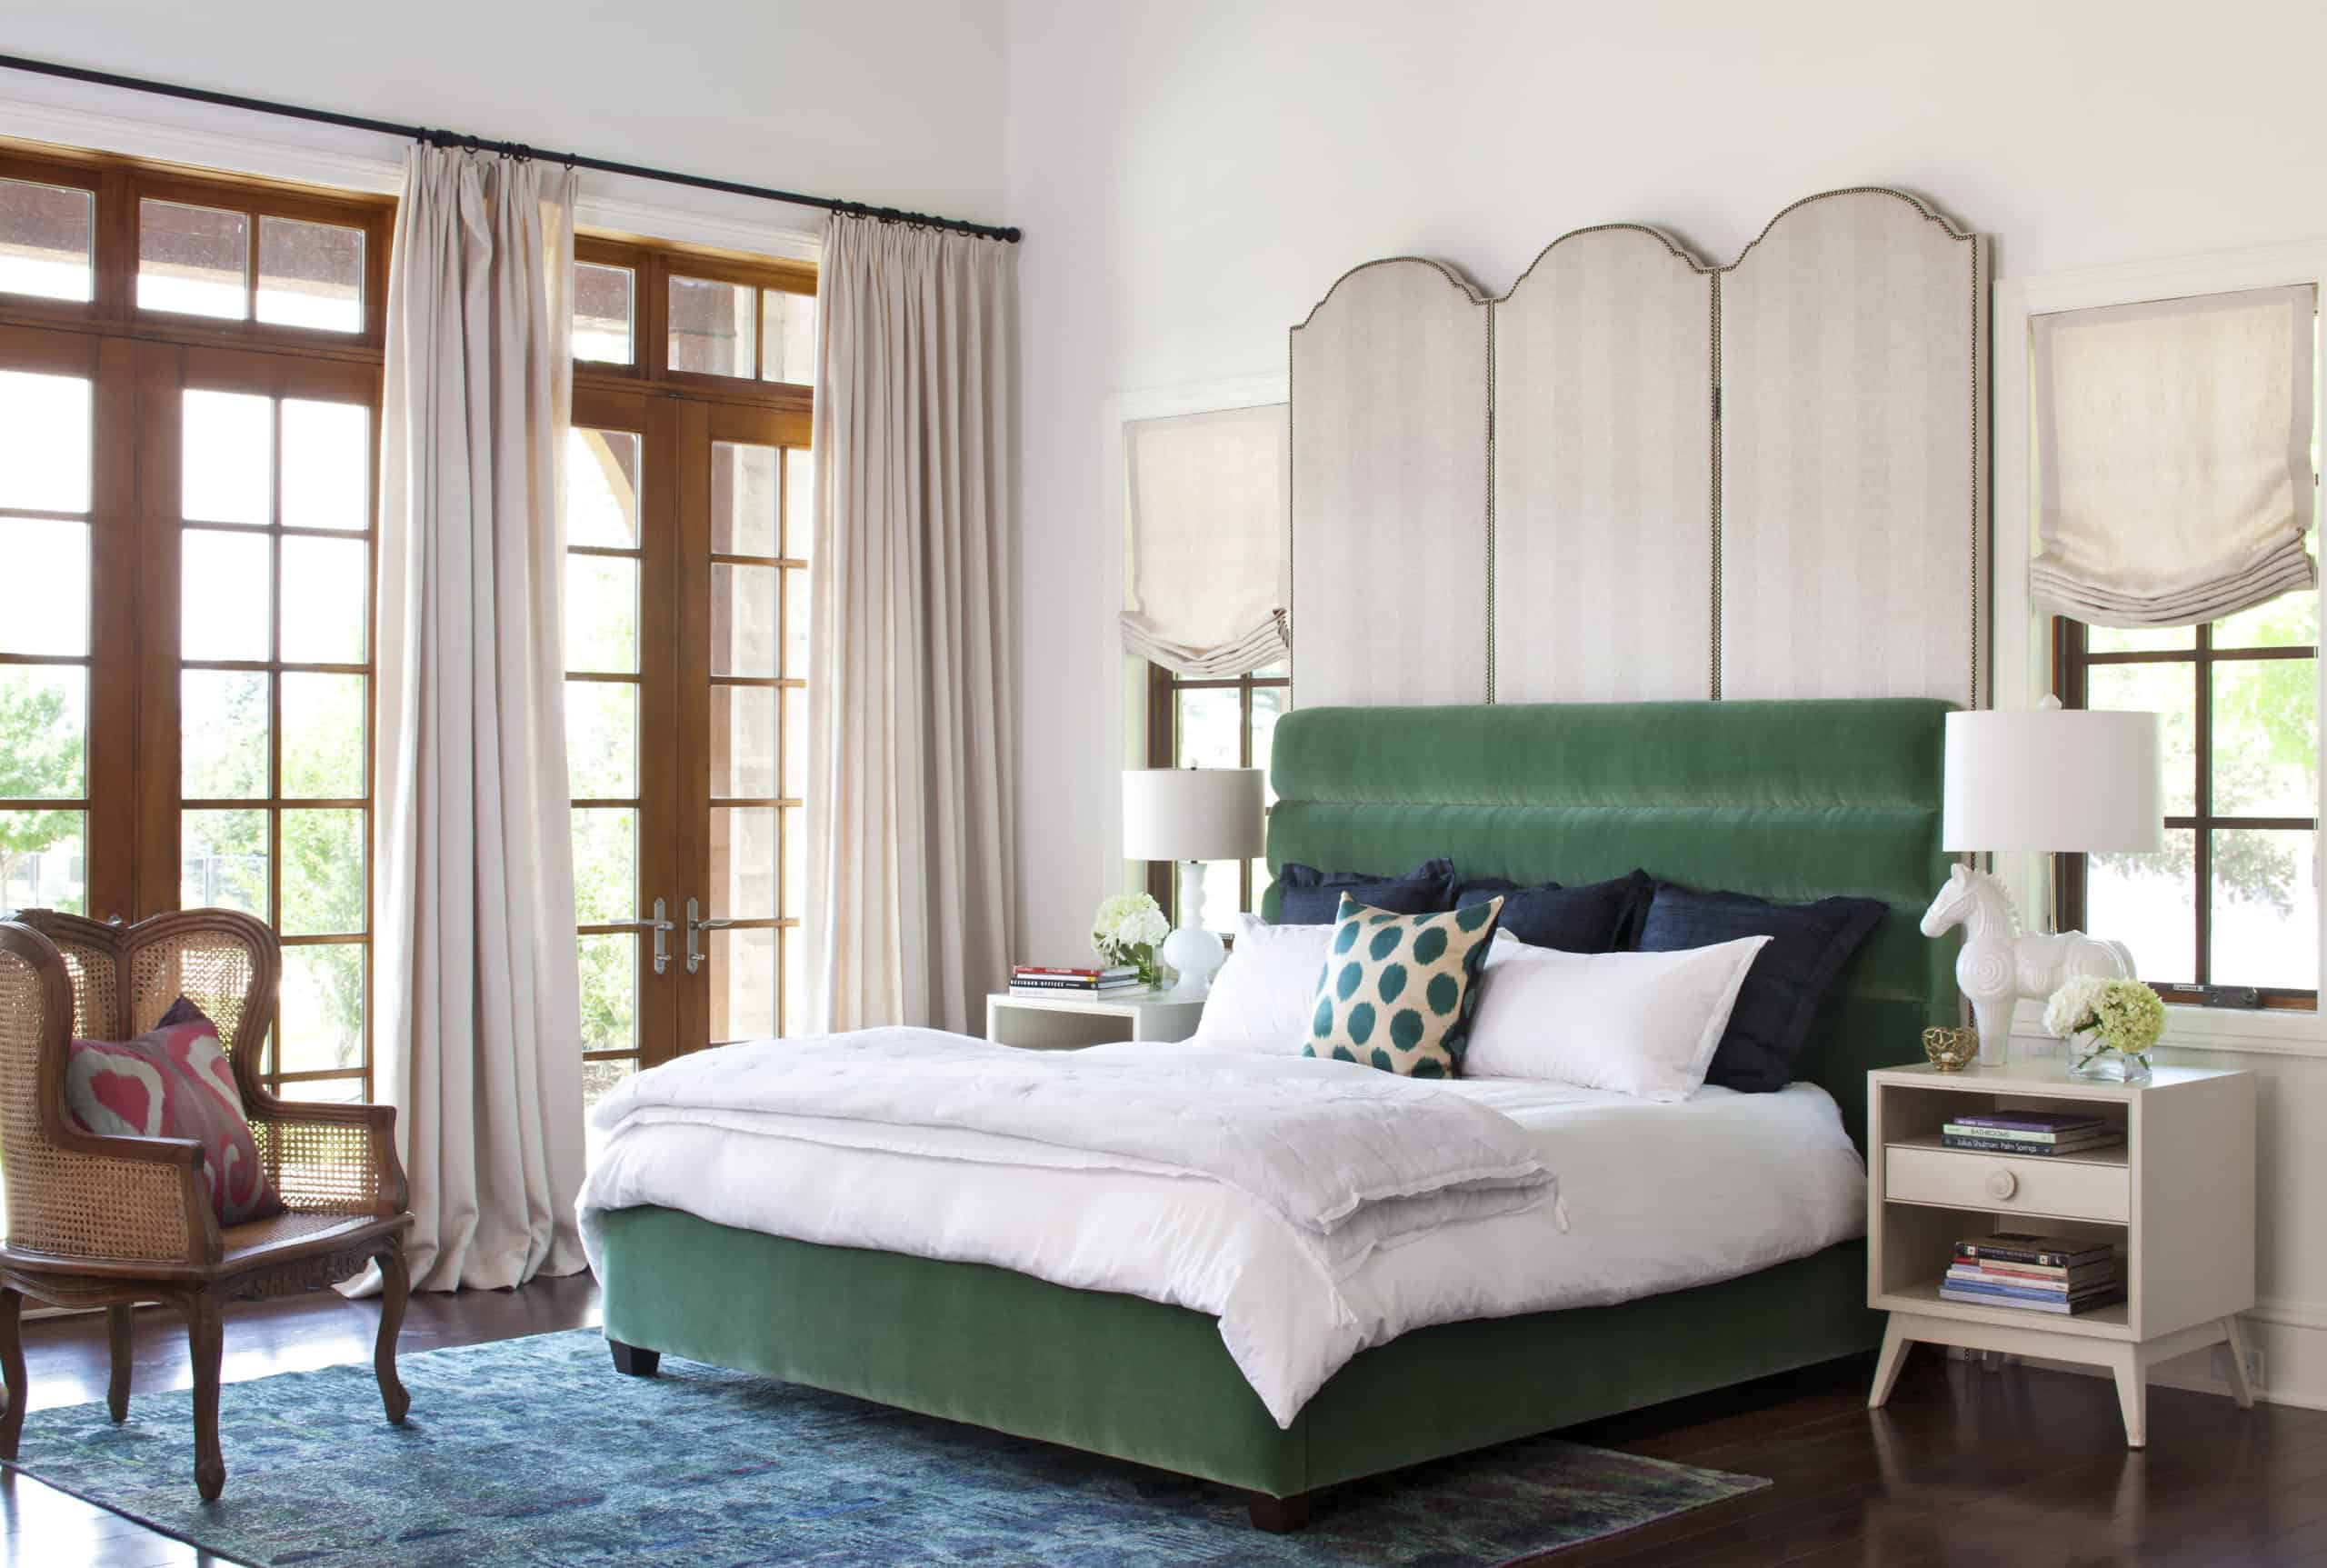 Custom Emerald Green Bed with High Headboard ni Bright Comfortable Bedroom